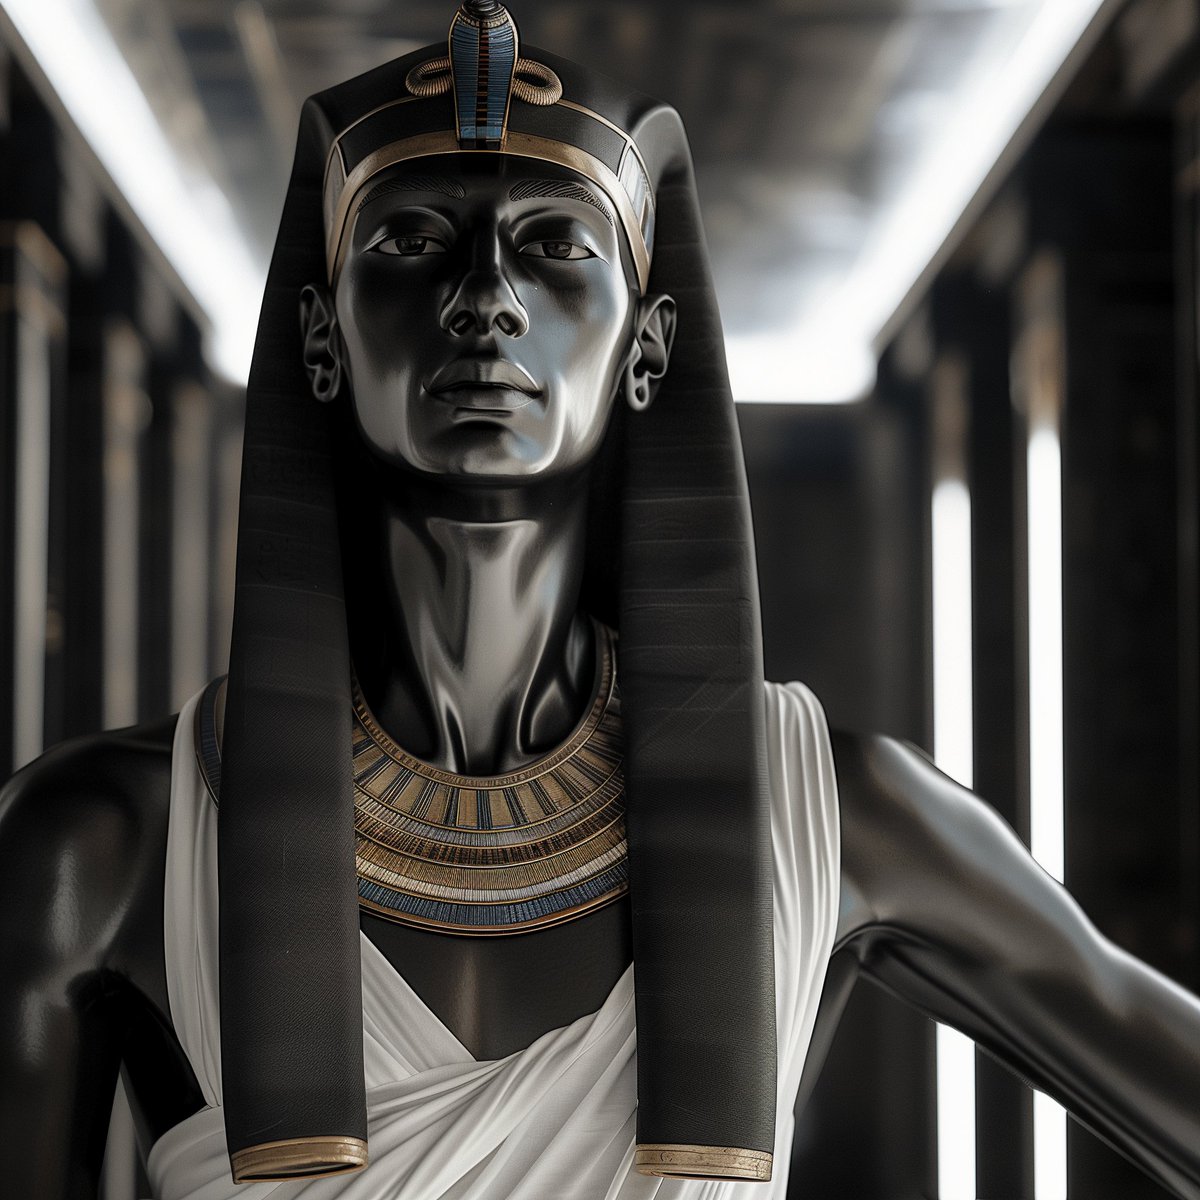 Fiberglass Pharaoh #graphictheory 

#fiberglass #Pharaoh #Egyptology #mannequin

#AI #AIfashion #AIart #AIartwork #AIartist #Aiartcommunity #midjourney #midjourneyfashion #midjourneyart #midjourneyartwork #midjourneyartist #midjourneycommunity #midjourneyAIart #midjourneyAI